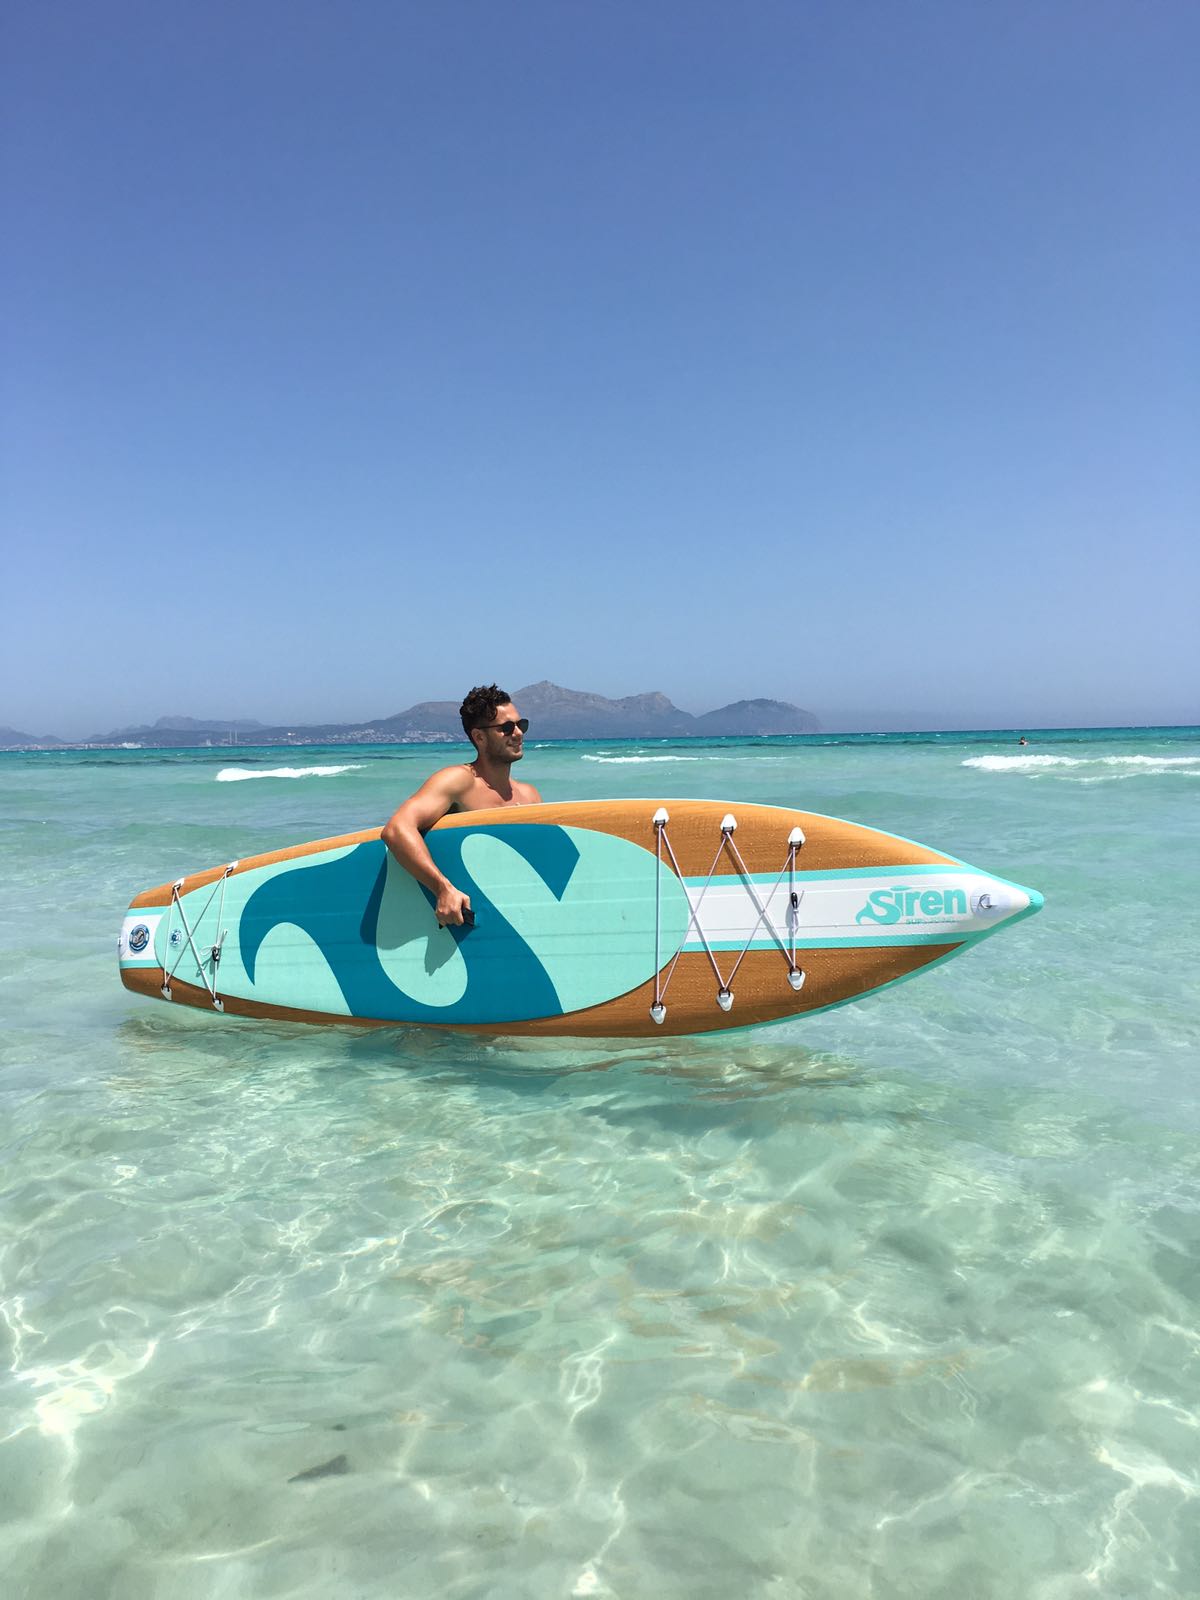 Siren rubio auf Mallorca Stand Up Paddleboard